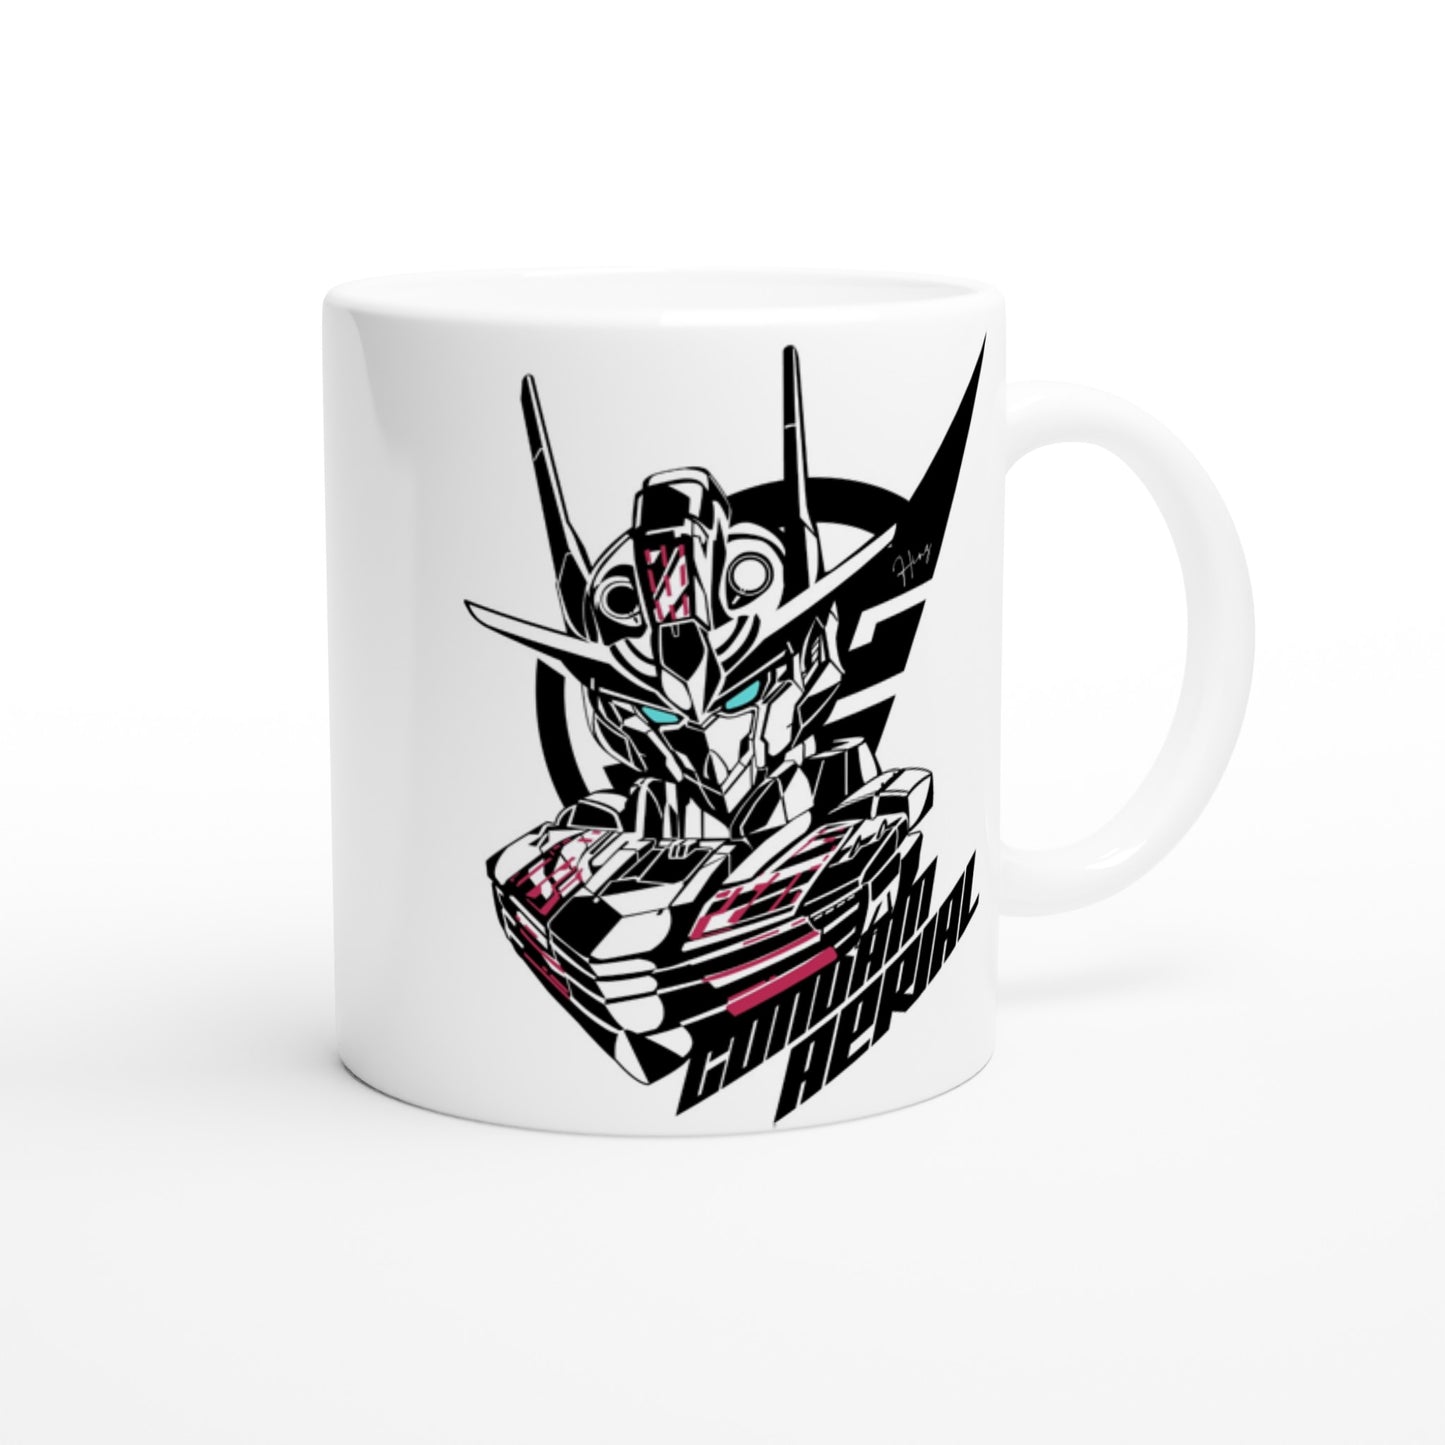 Gundam-Tasse – Gundam-Luftbild – weiße Keramik-Tasse, 330 ml 